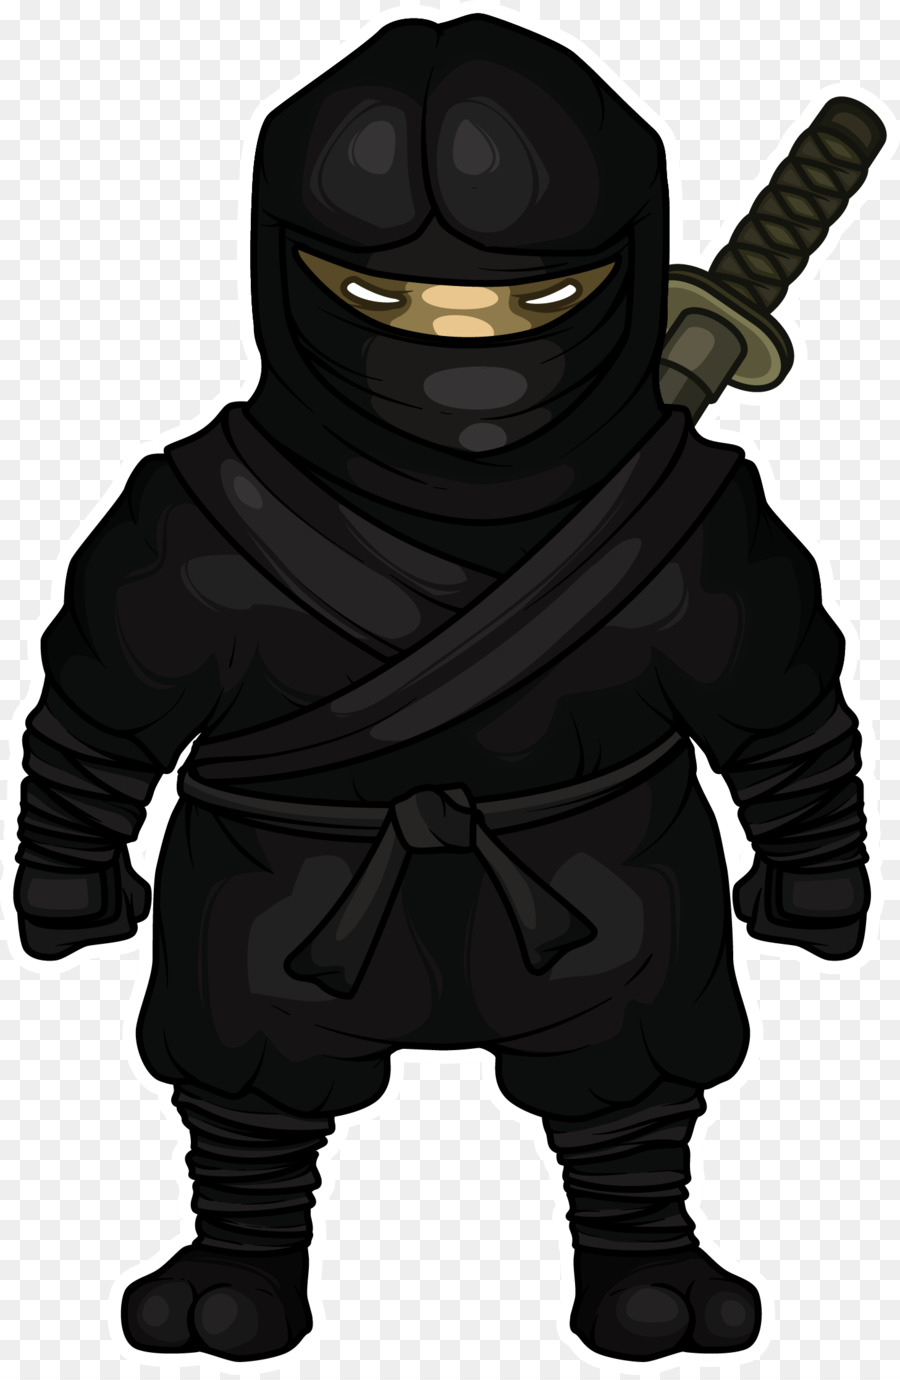 Ninja Shutterstock - Japanese ninja agent vector png download - 1457*2226 - Free Transparent Ninja png Download.